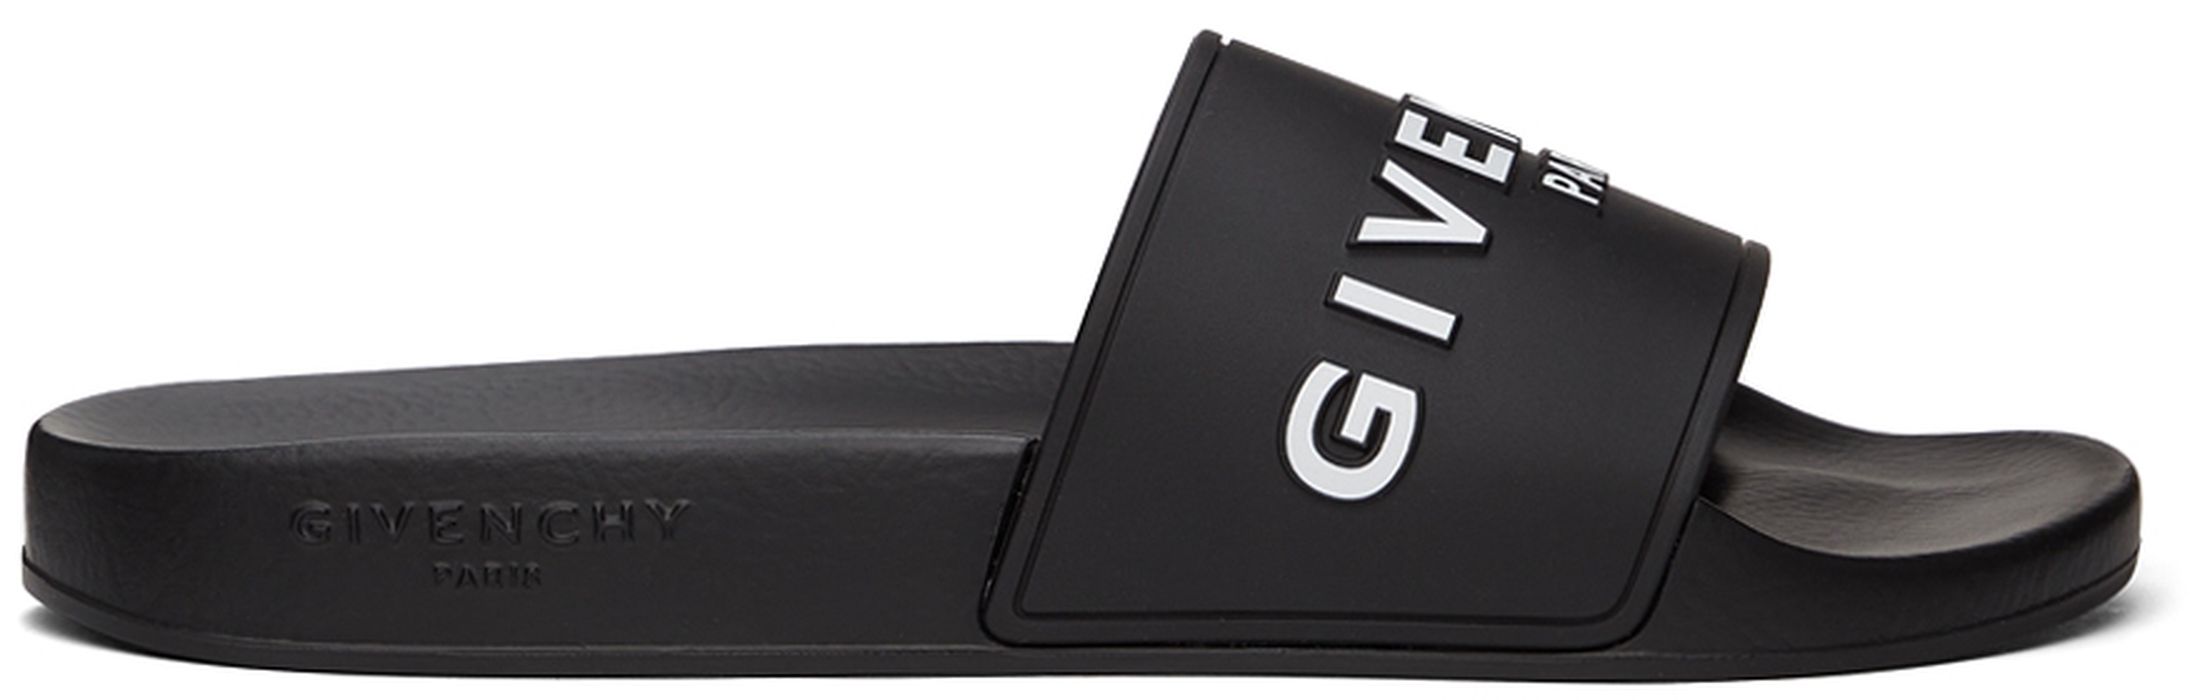 Givenchy Black Givenchy Paris Flat Sandals